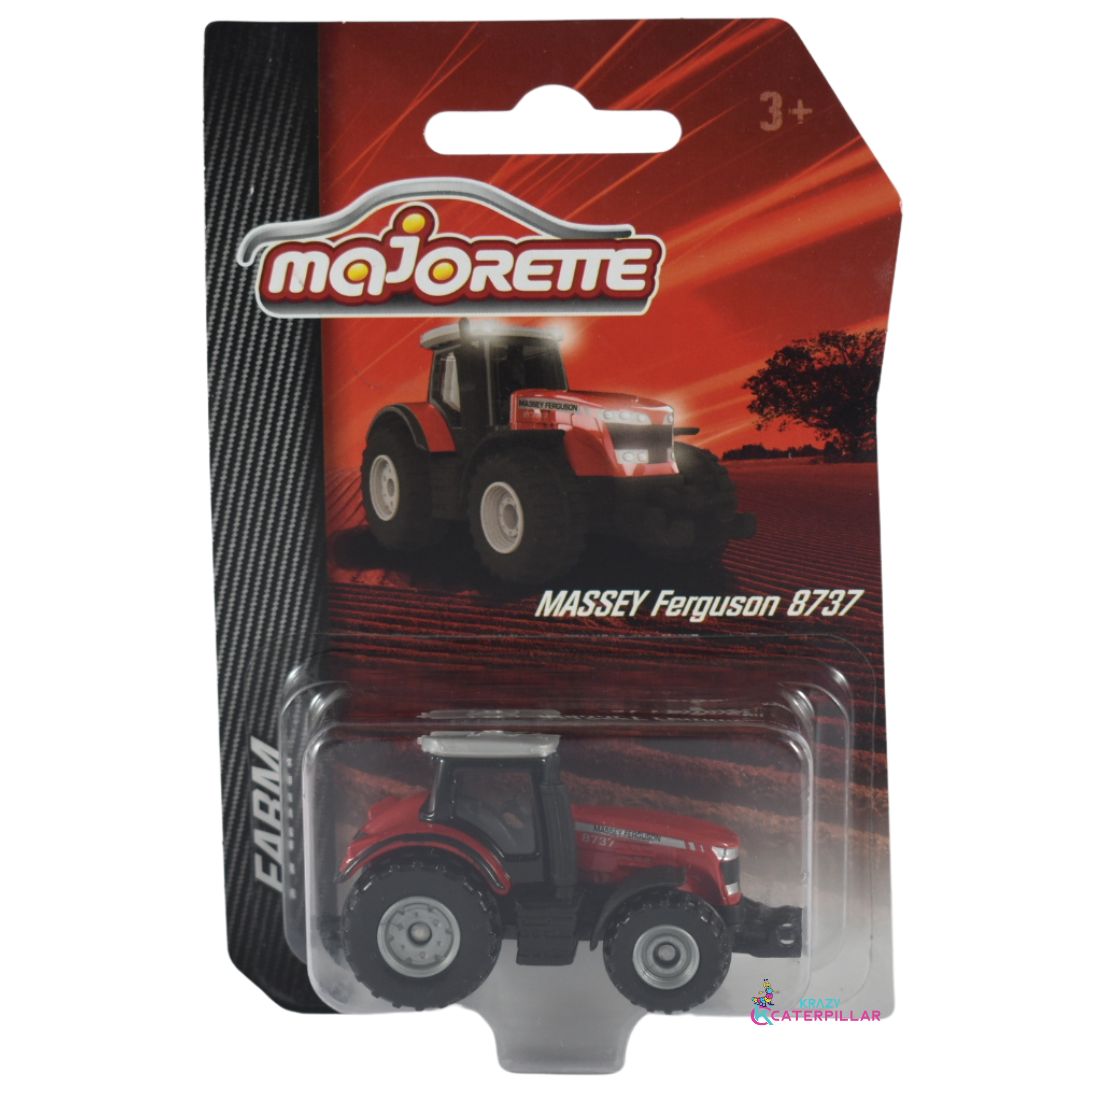 Massey Ferguson 8737: Tractor - Farm | Majorette